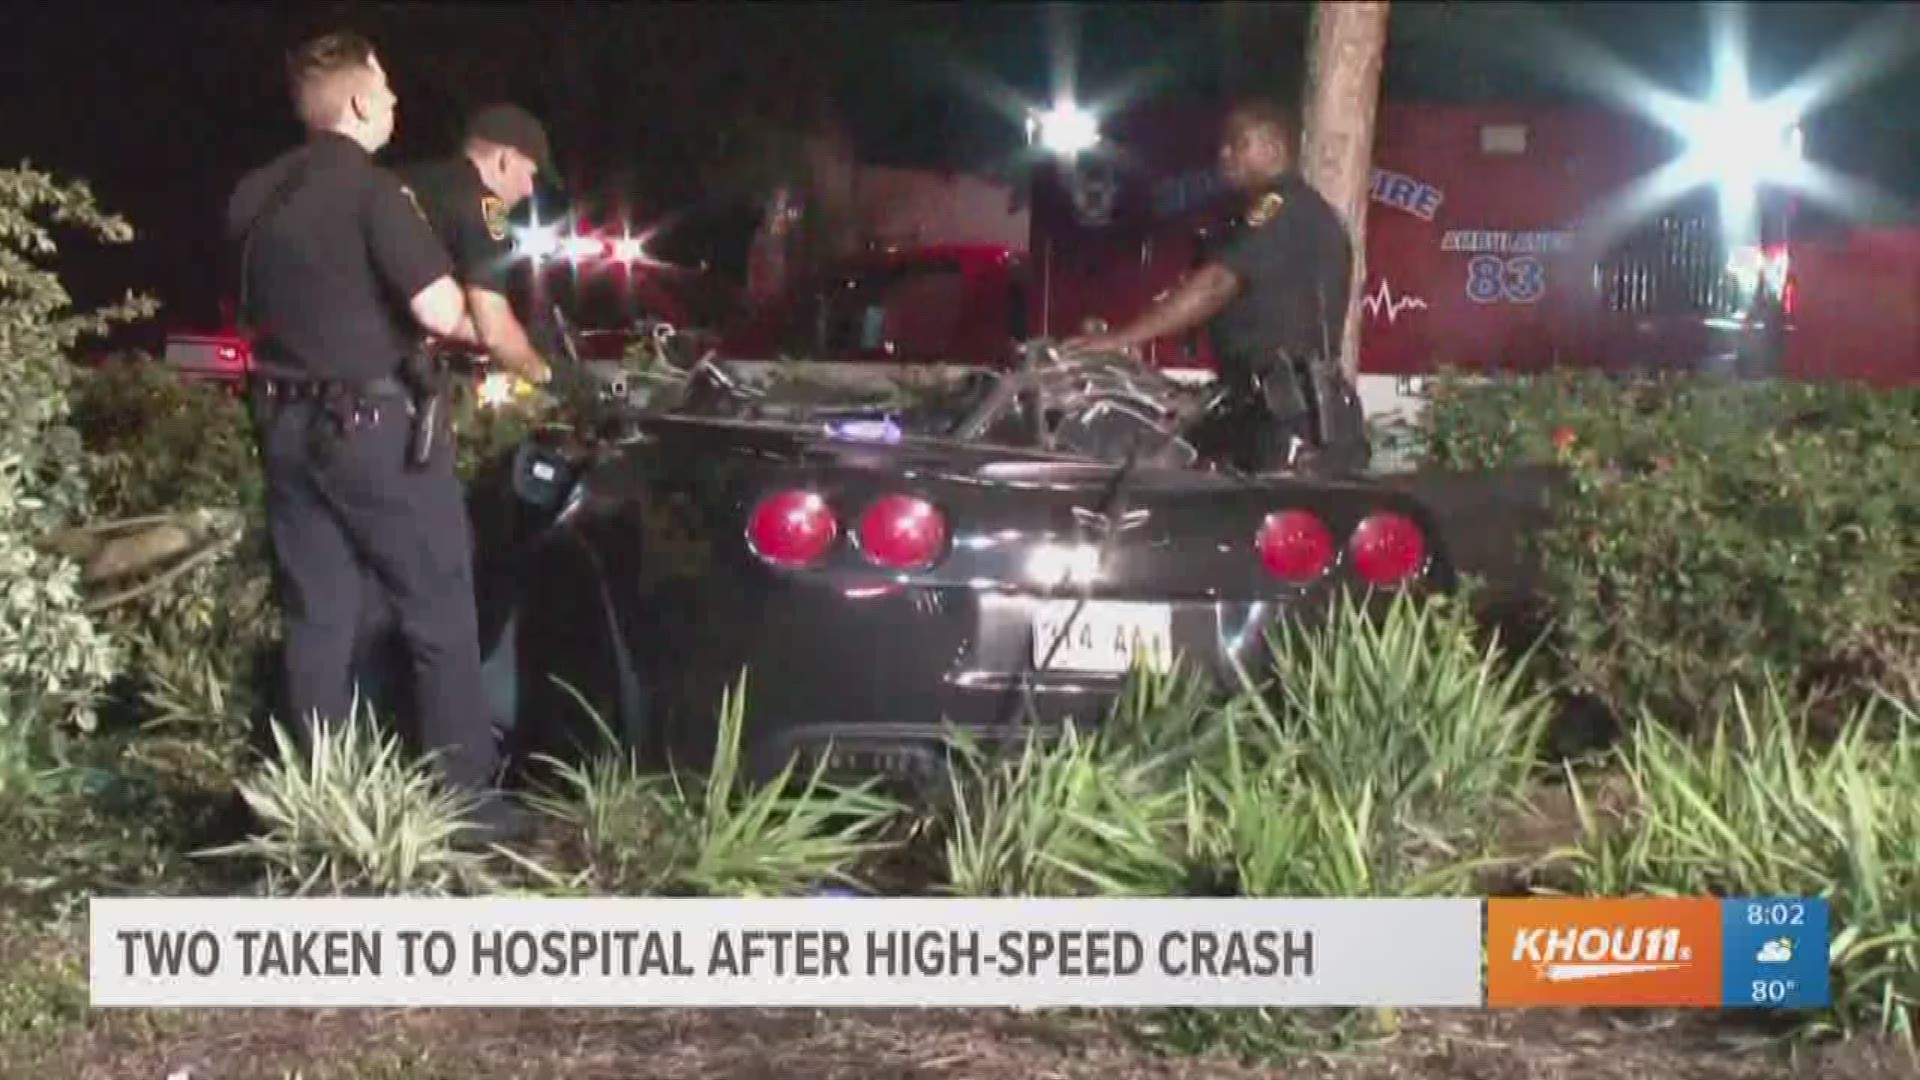 KHOU 11's Ron Trevino reports on a Corvette crash that sent two men to the hospital in Houston